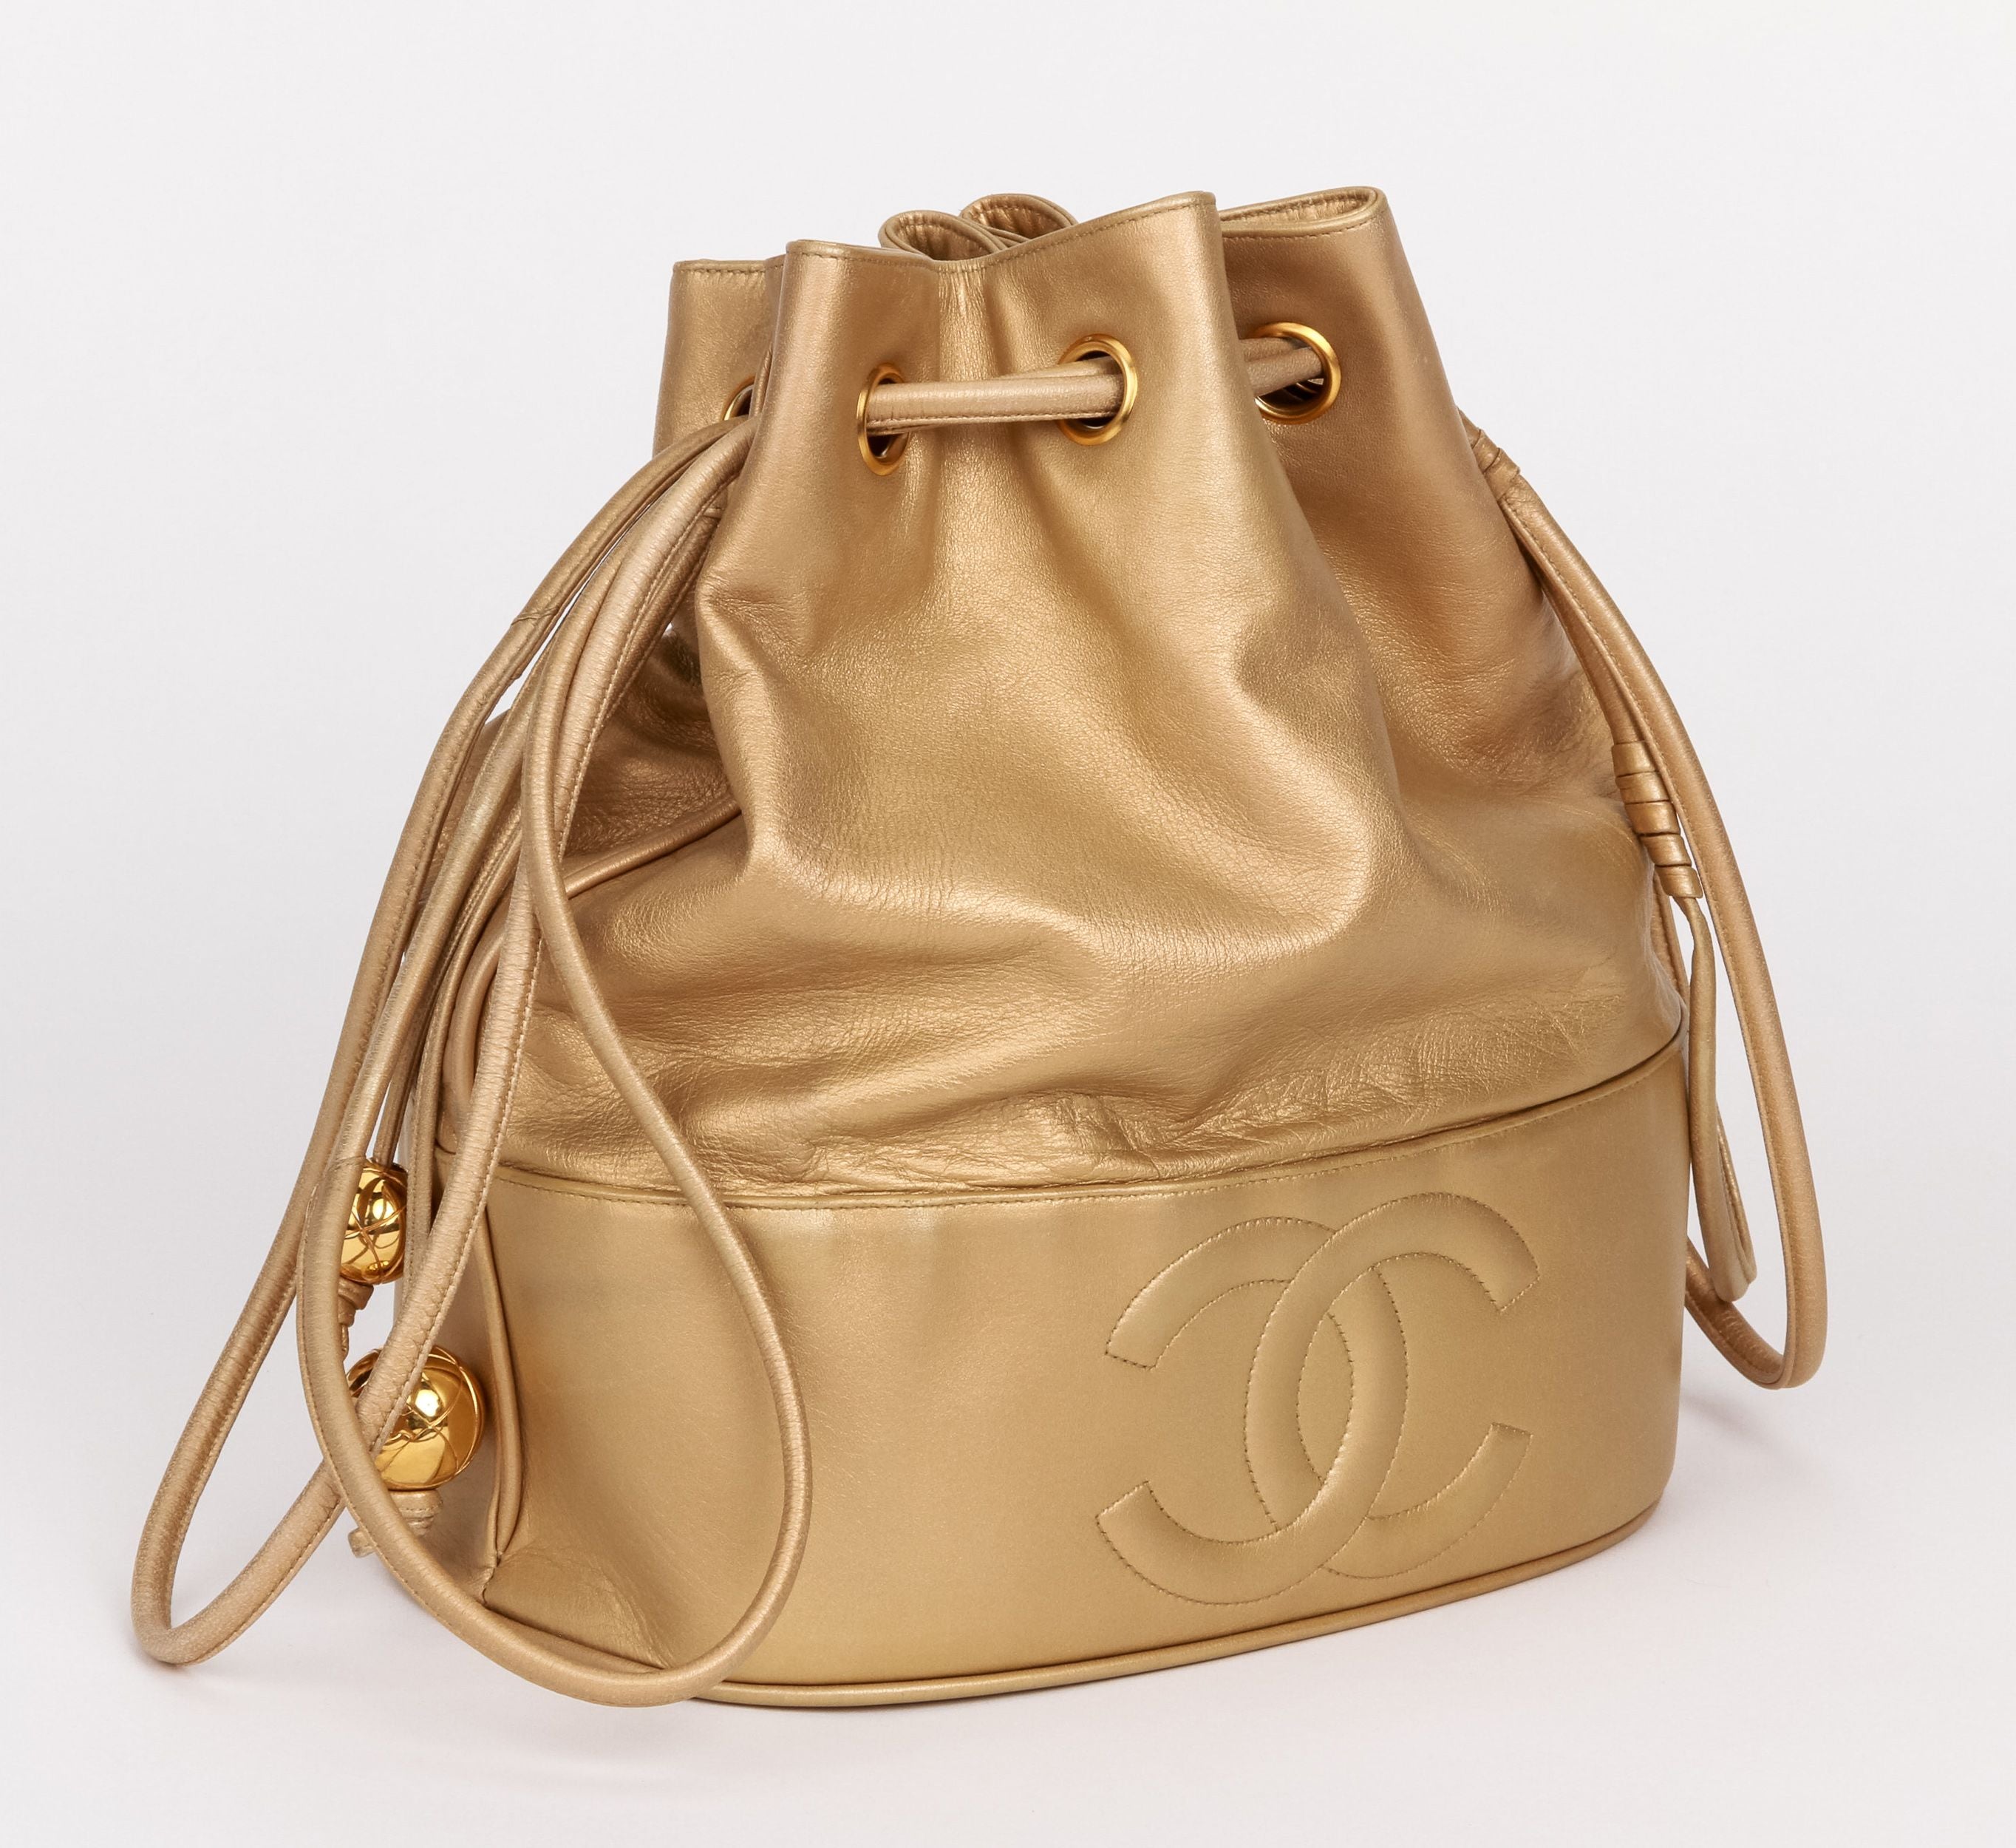 Chanel Vintage Chanel Black Lambskin Drawstring Bucket Bag + pouch